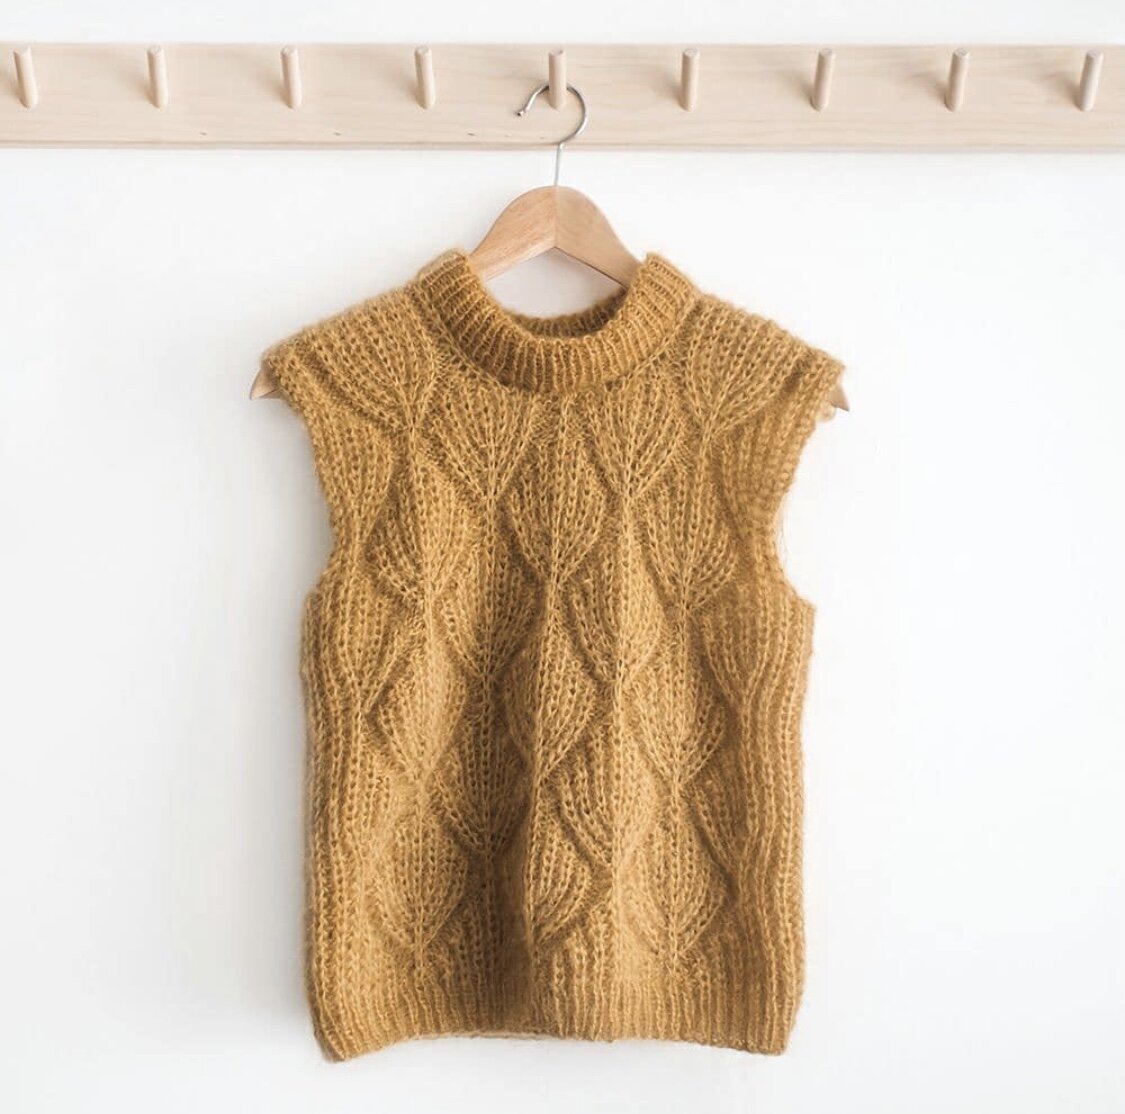 environ 101.60 cm Mesdames Câble Jaune Pull Sweater Tricot Motif Tweed DK 34-40 in